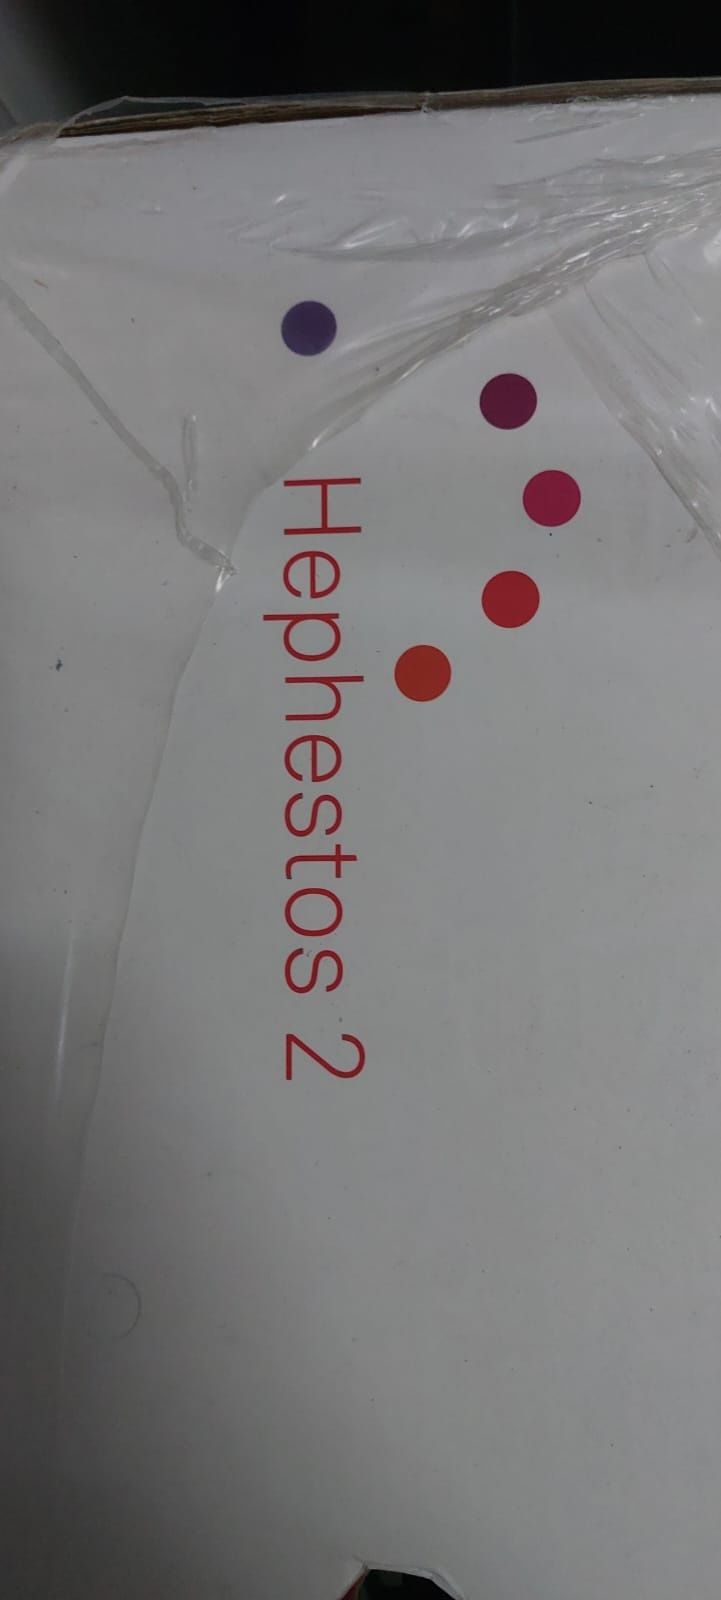 hephestos 2 3d printer